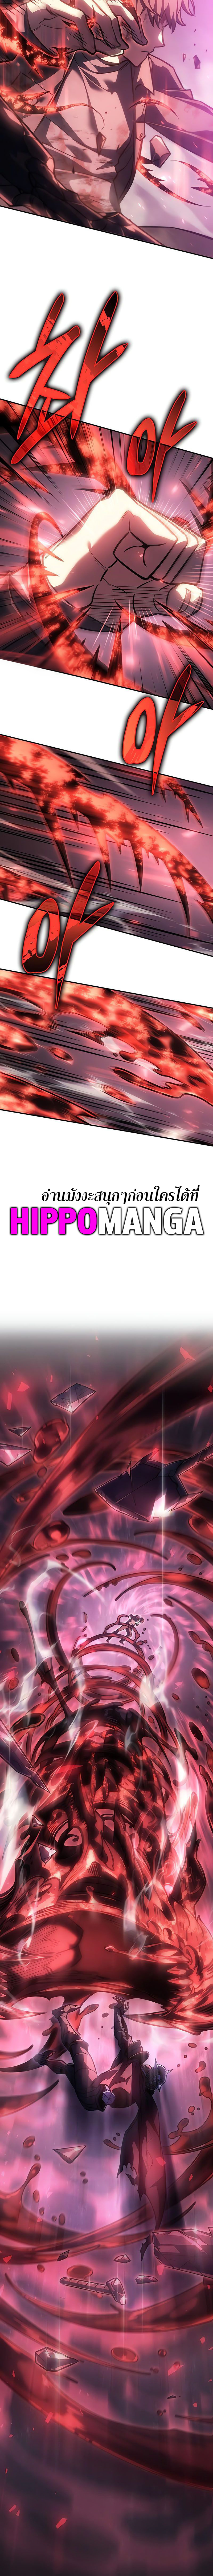 Regressing with the King’s Power 22 hippomanga com (24)